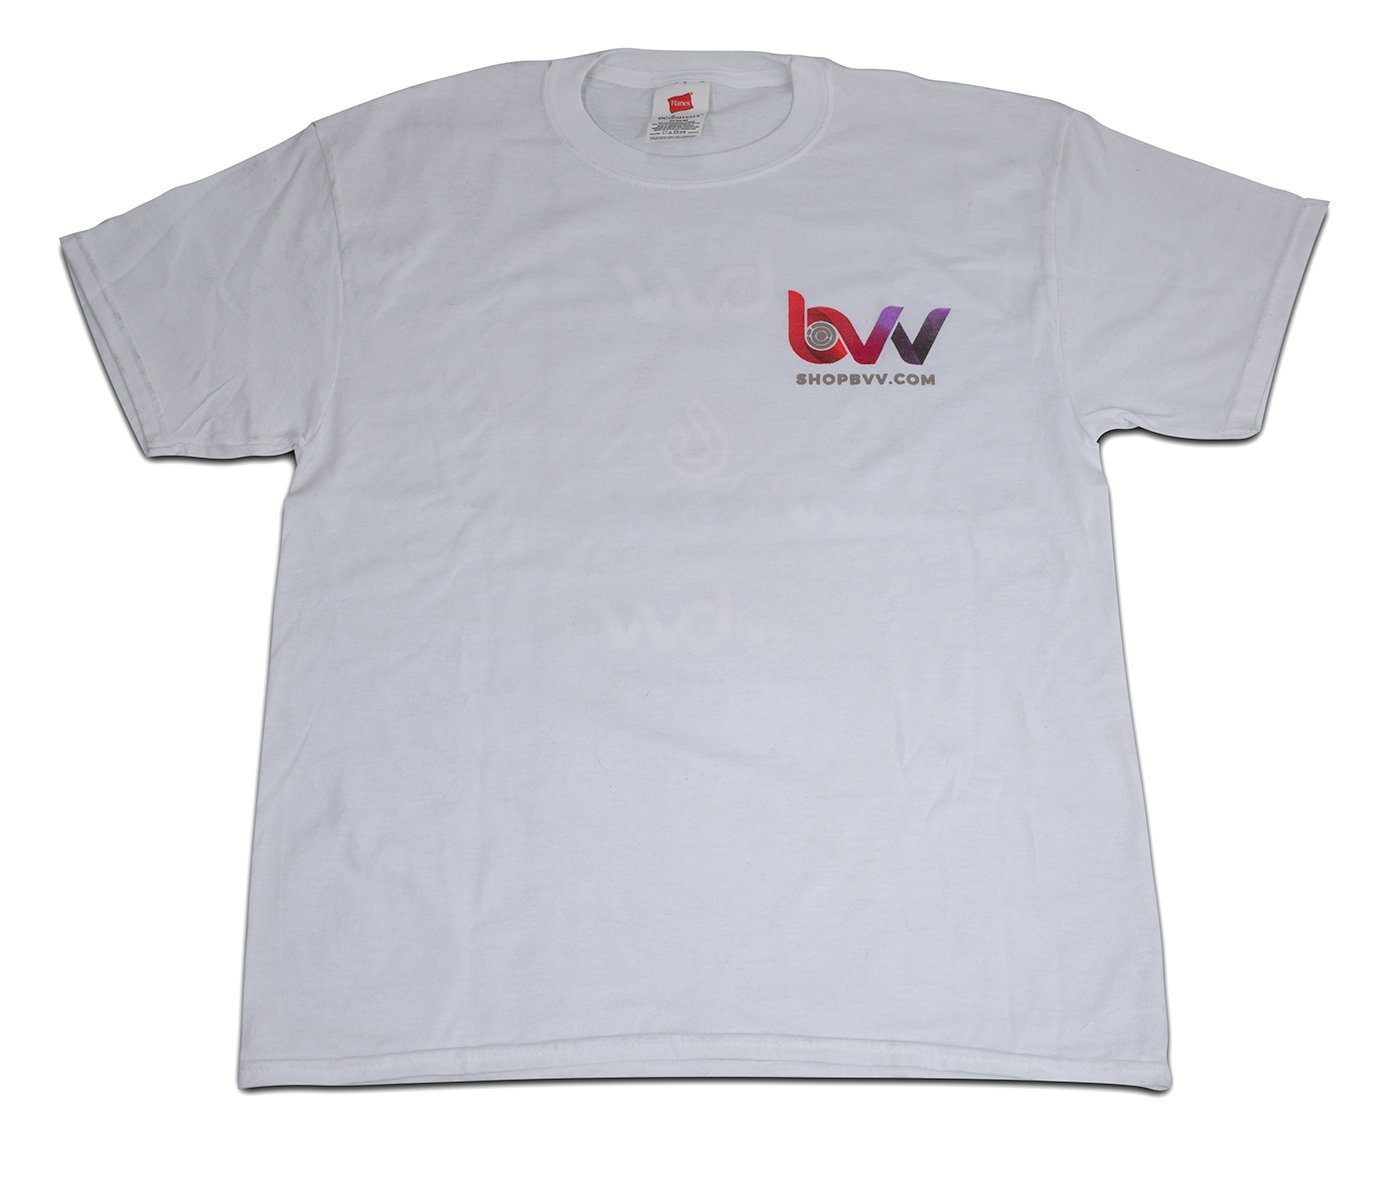 BVV BRANDS T-Shirt New Products BVV White Small 